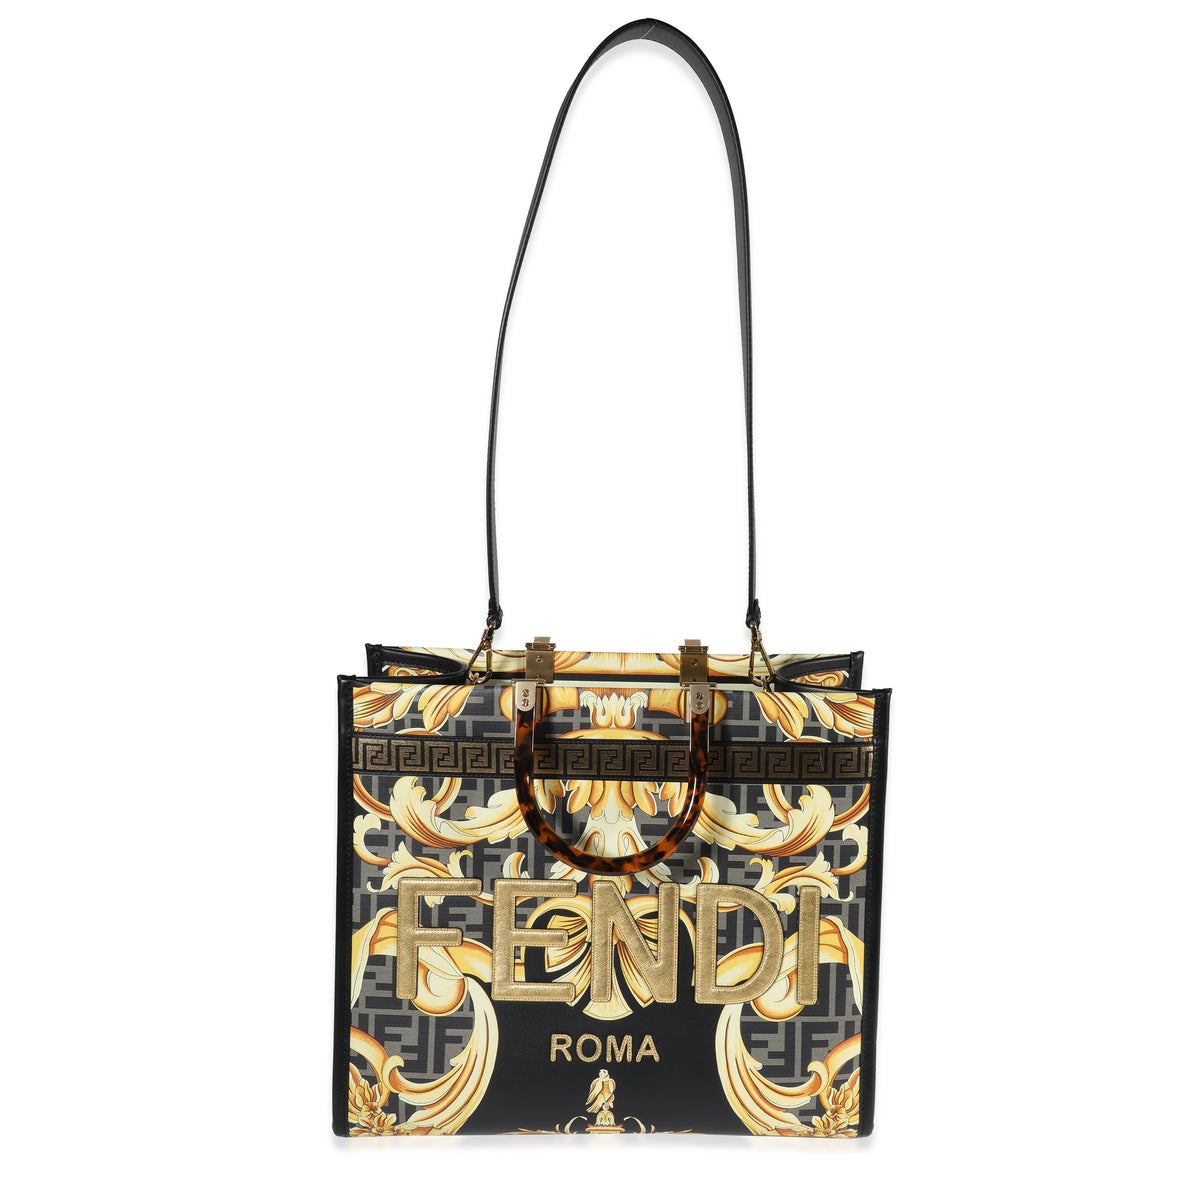 Fendi Versace Fendace Medium Tote Bag